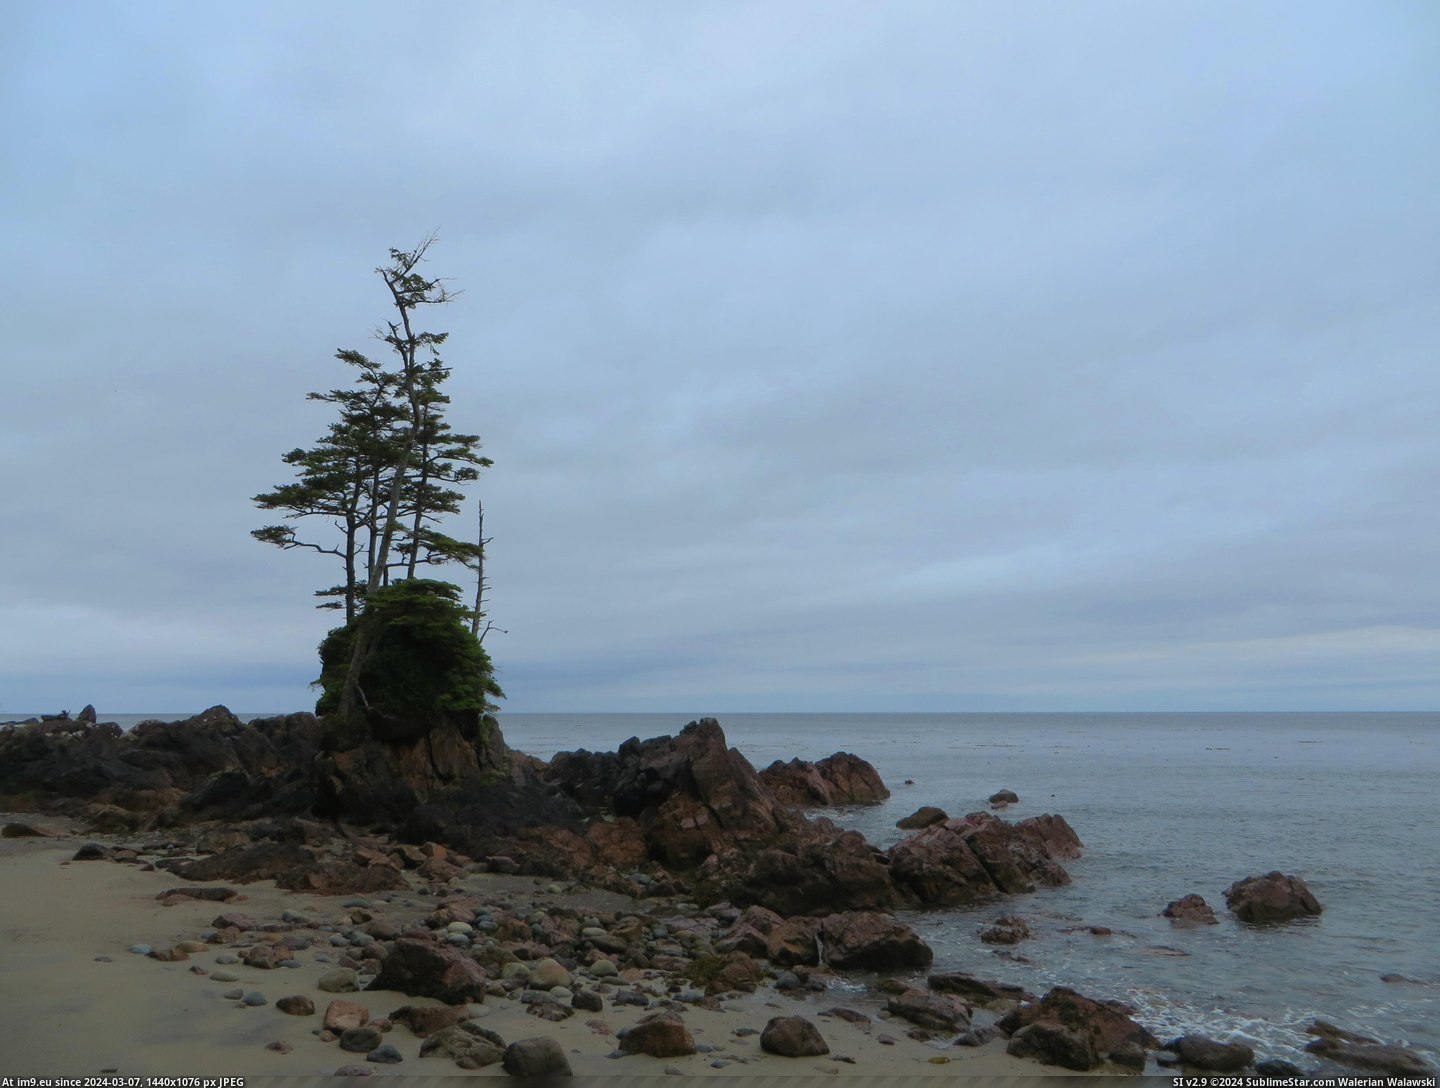 #Rock #Trees #Ocean #Storm #Facing #Spruce #Pillar #Pacific #Cape #Scott #Lone [Earthporn] Storm battered Spruce trees on a lone pillar of rock facing the open Pacific ocean. Cape Scott, BC.  [3967x2975] Pic. (Bild von album My r/EARTHPORN favs))